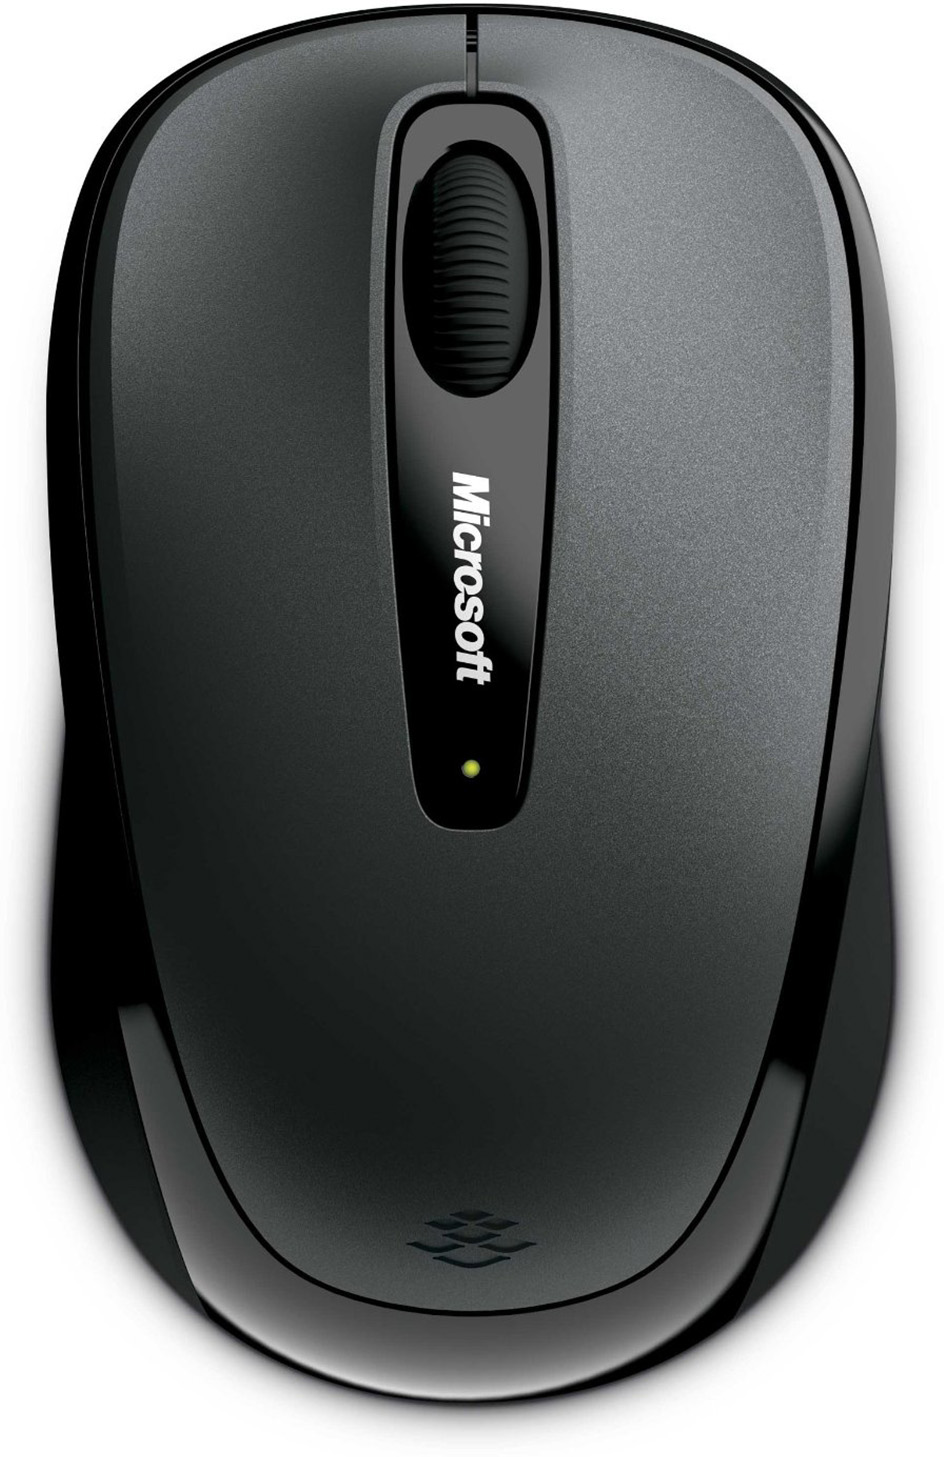 Rationalization escape Pacific Islands Buy Microsoft Wireless Mobile Mouse 3500 - Microsoft Store